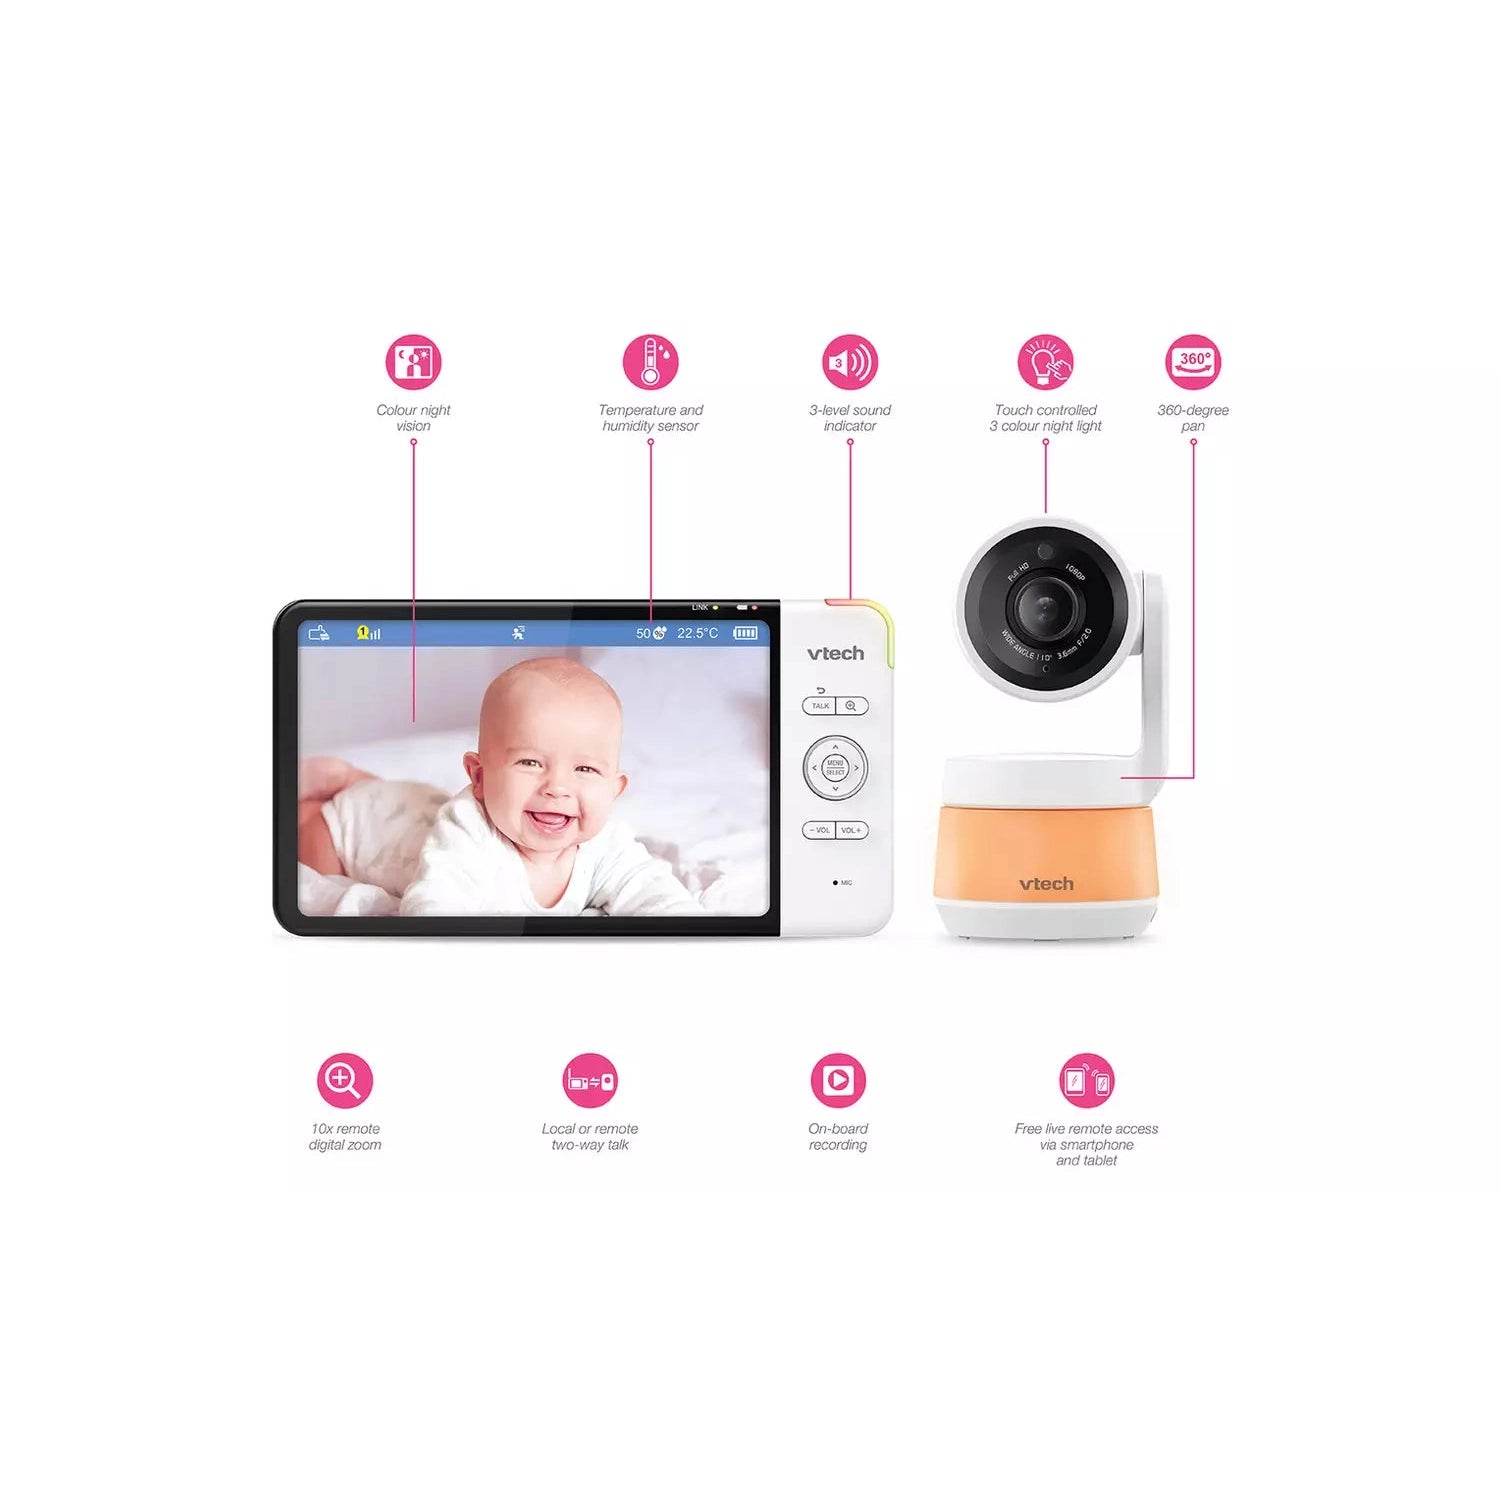 VTech RM7767HD Smart Video Baby Monitor - White - Refurbished Good